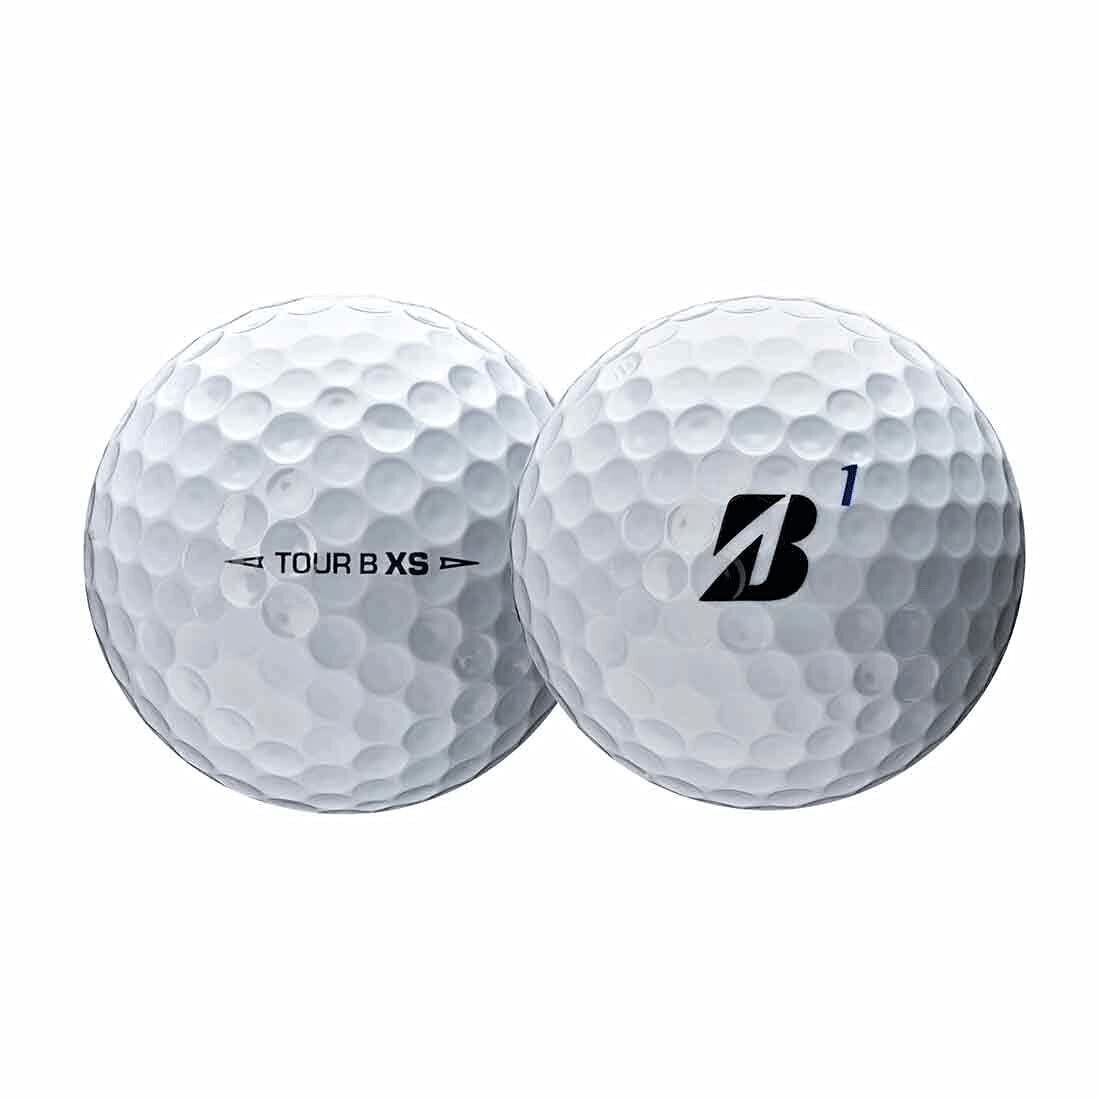 Bridgestone 2020 Tour B XS Golf Ball Sleeve - 3 Ball Pack - $16.32